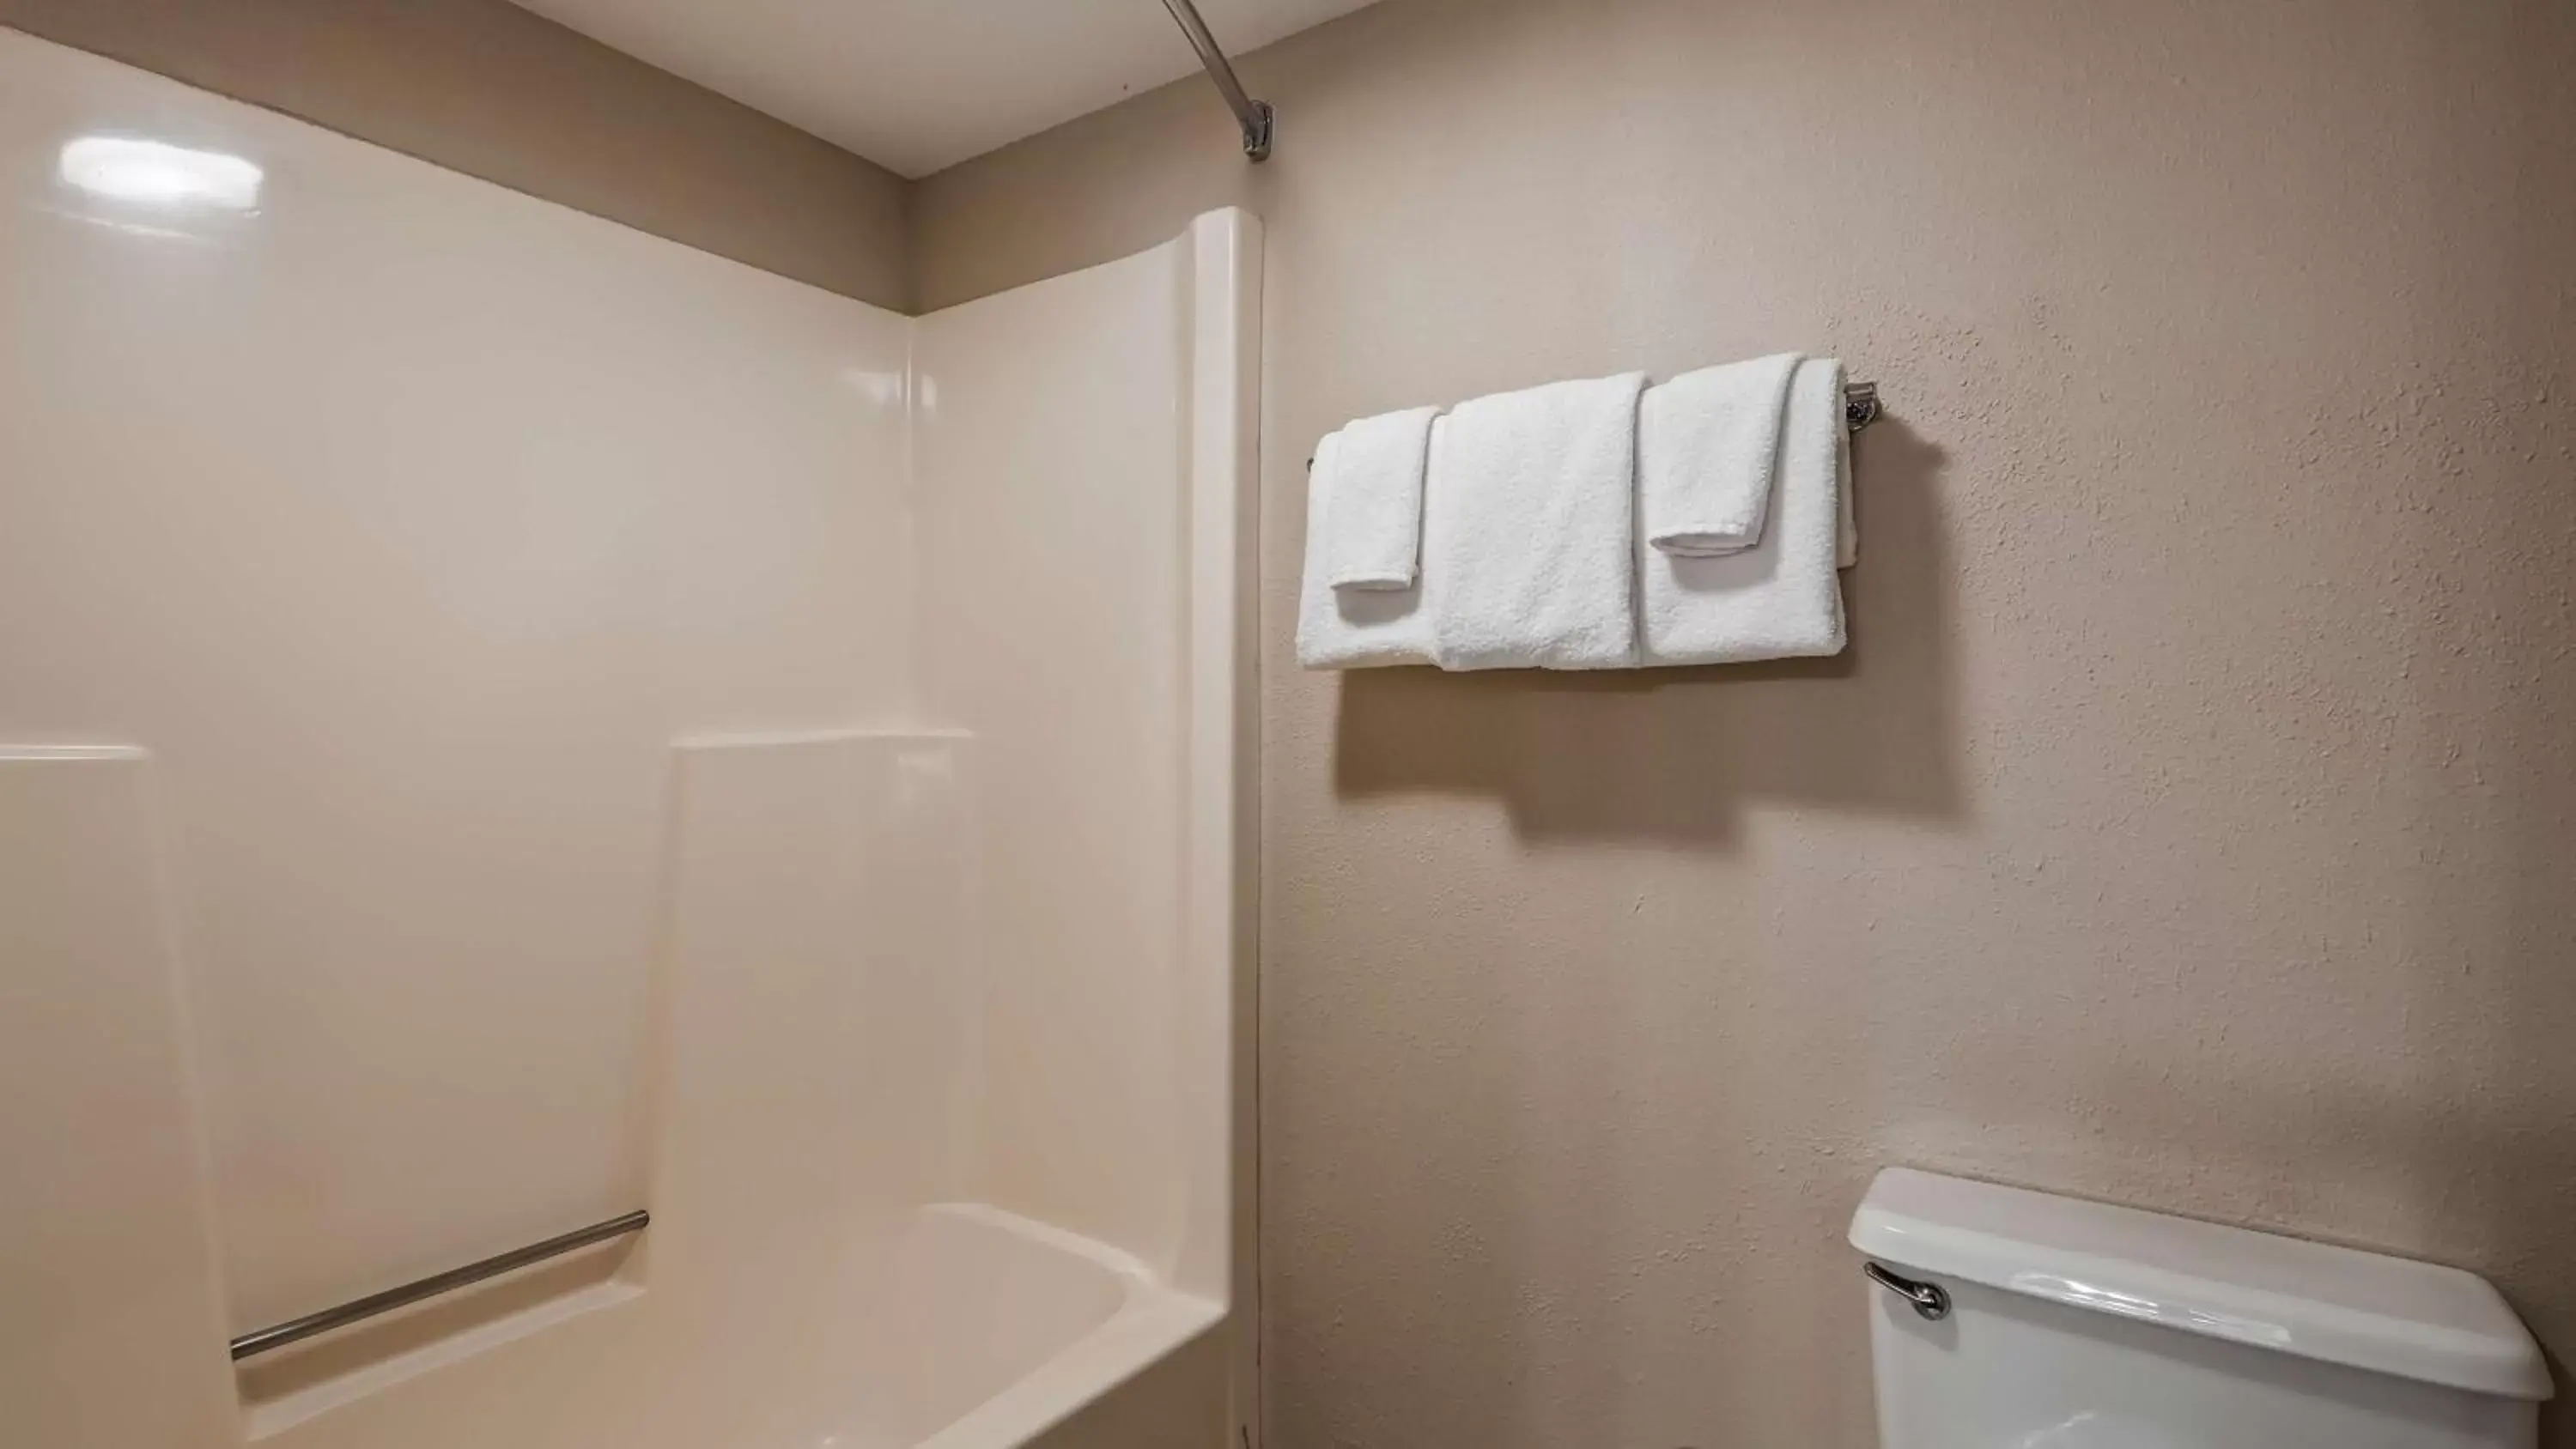 Photo of the whole room, Bathroom in Best Western Ramkota Hotel Aberdeen